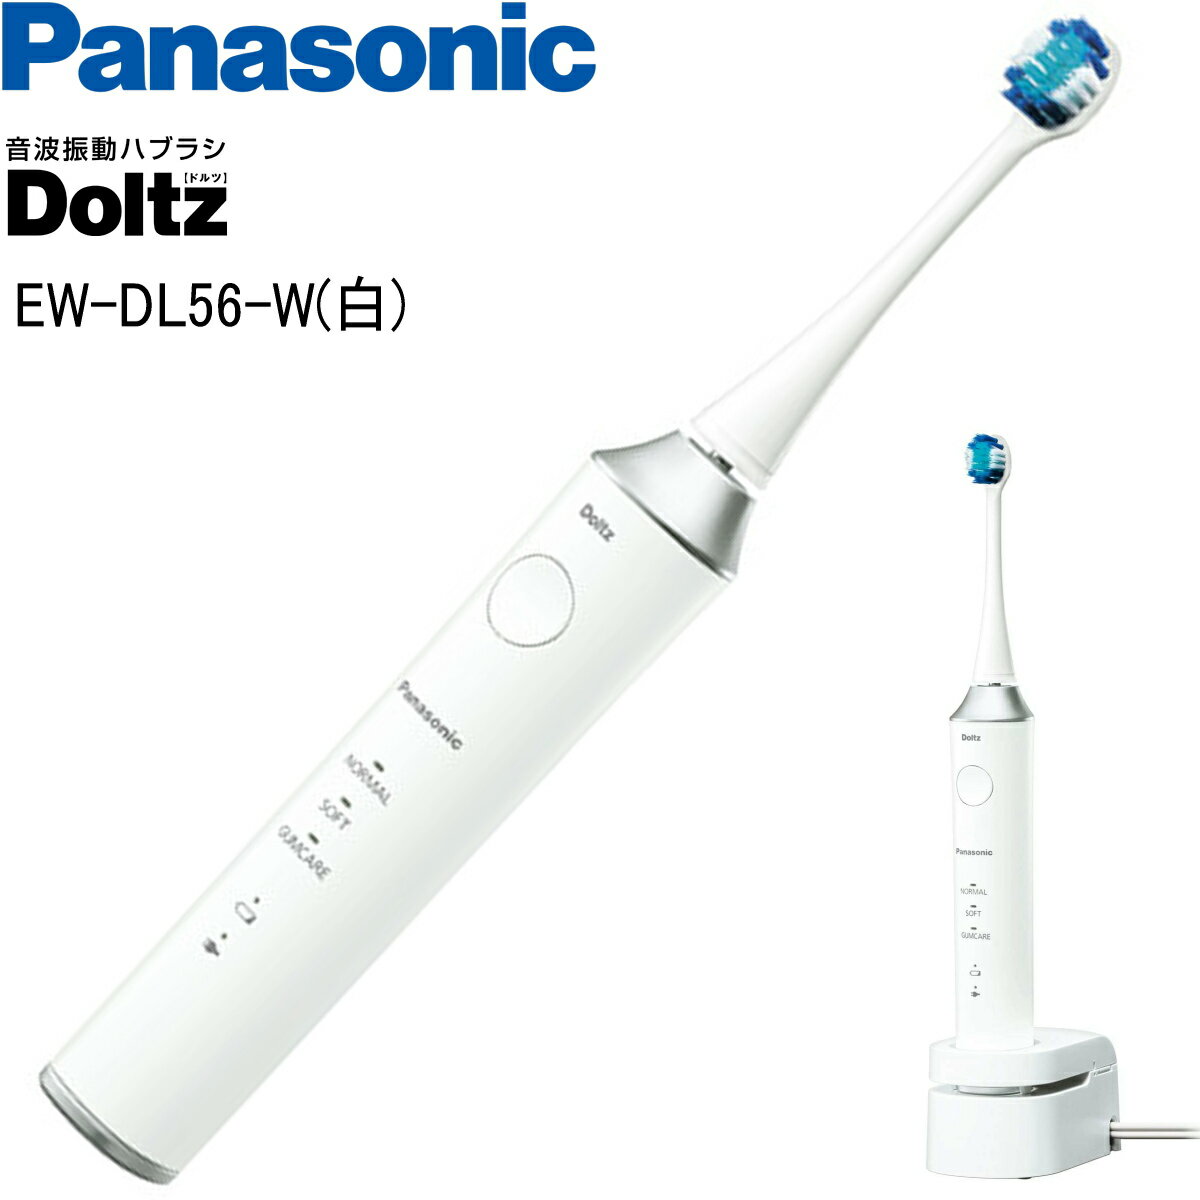 Panasonic 音波振動ハブラシ ドルツ EW-DL56-W